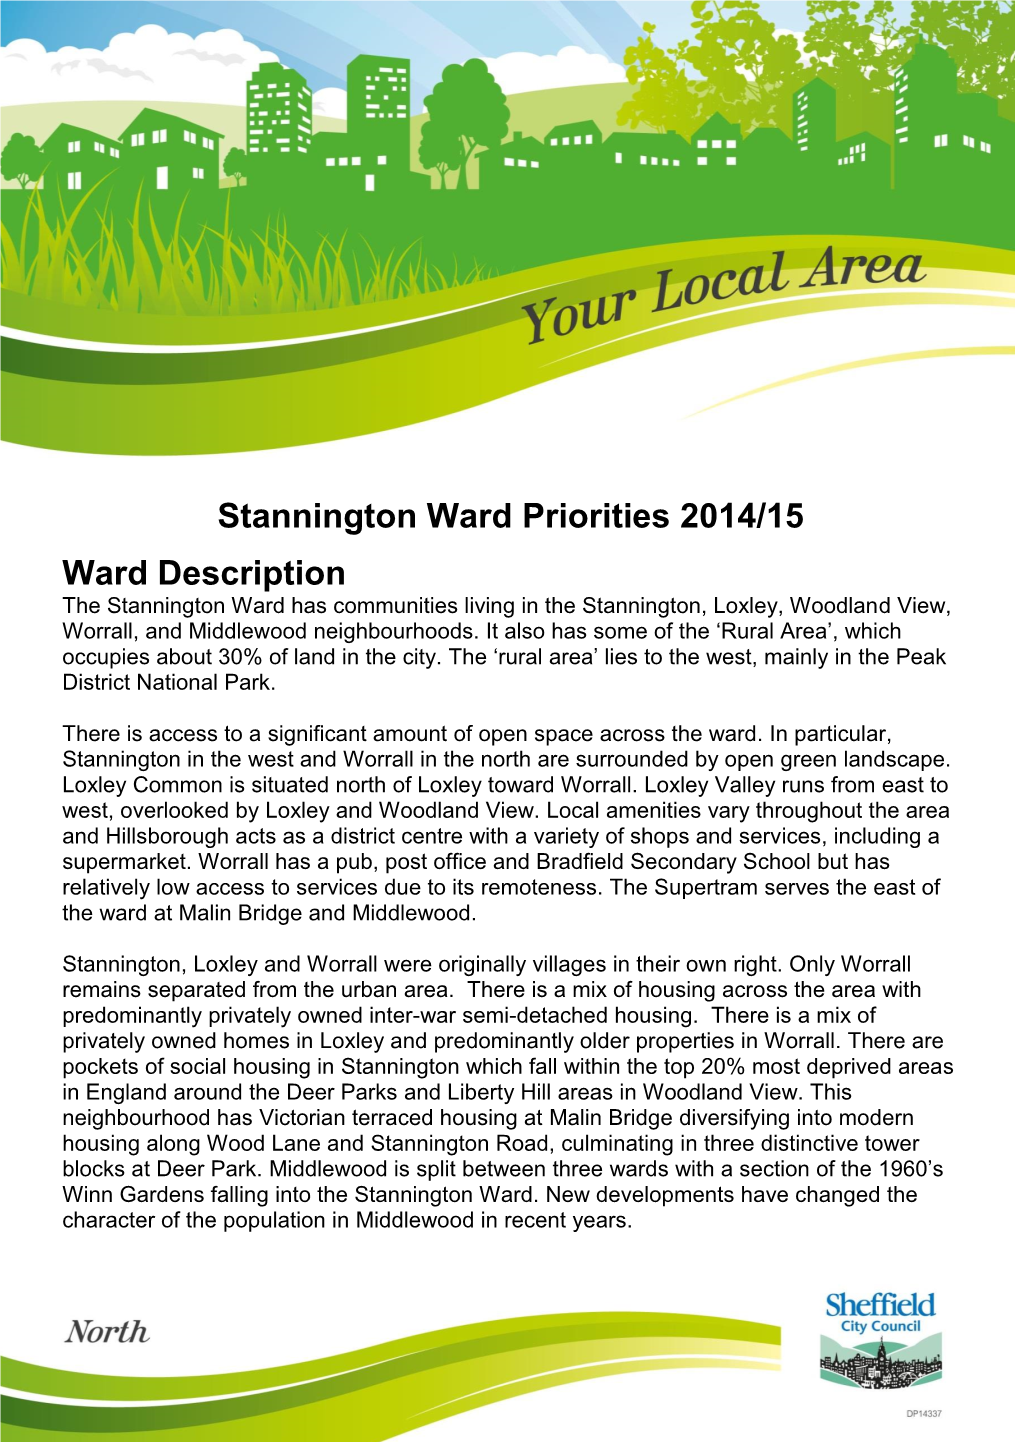 Stannington Ward Priorities 2014-15